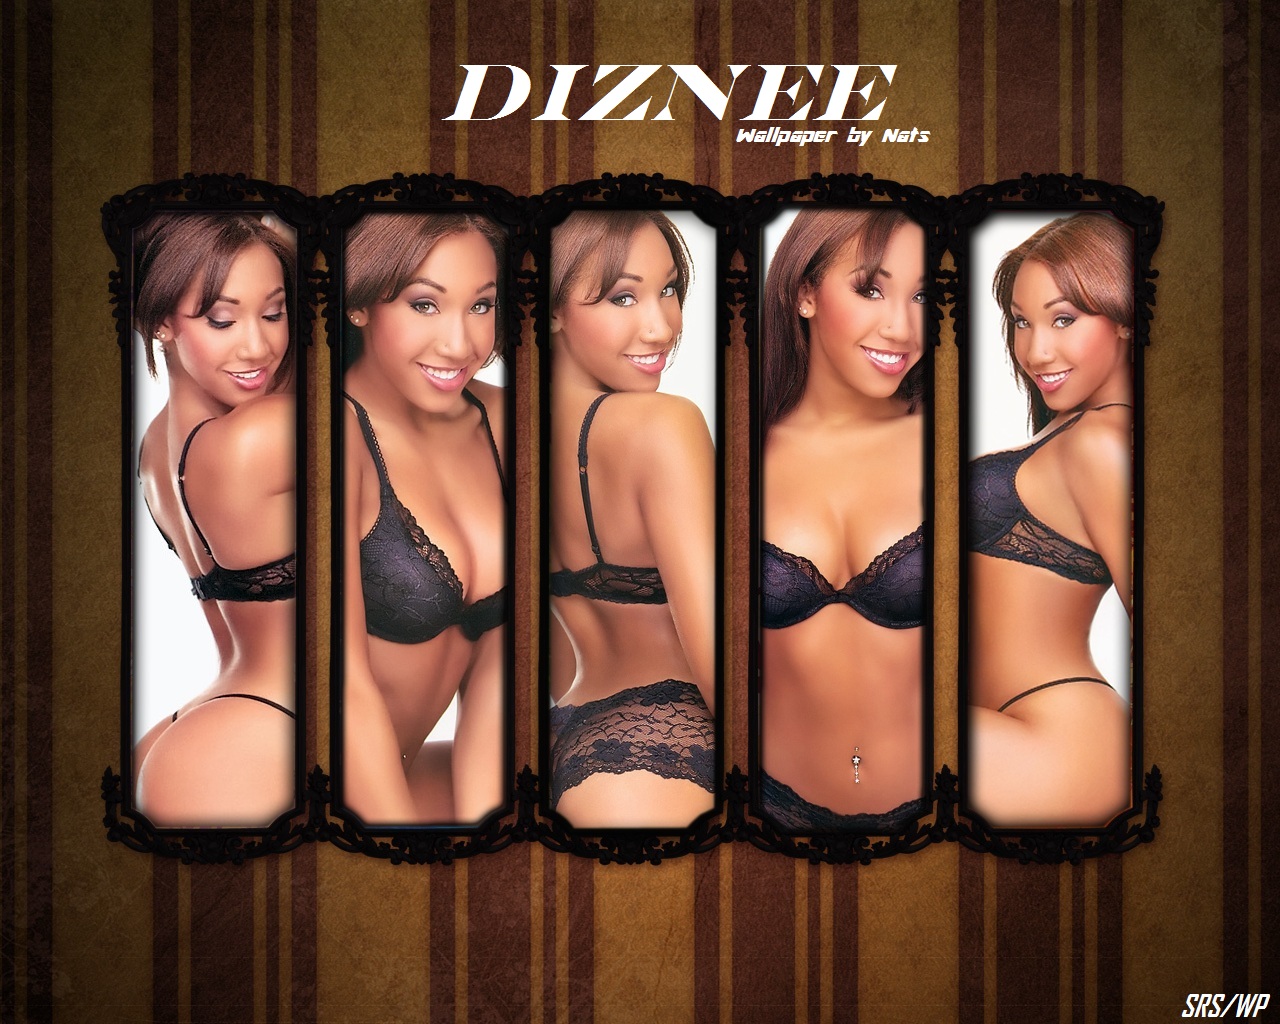 Download High quality Diznee wallpaper / Celebrities Female / 1280x1024